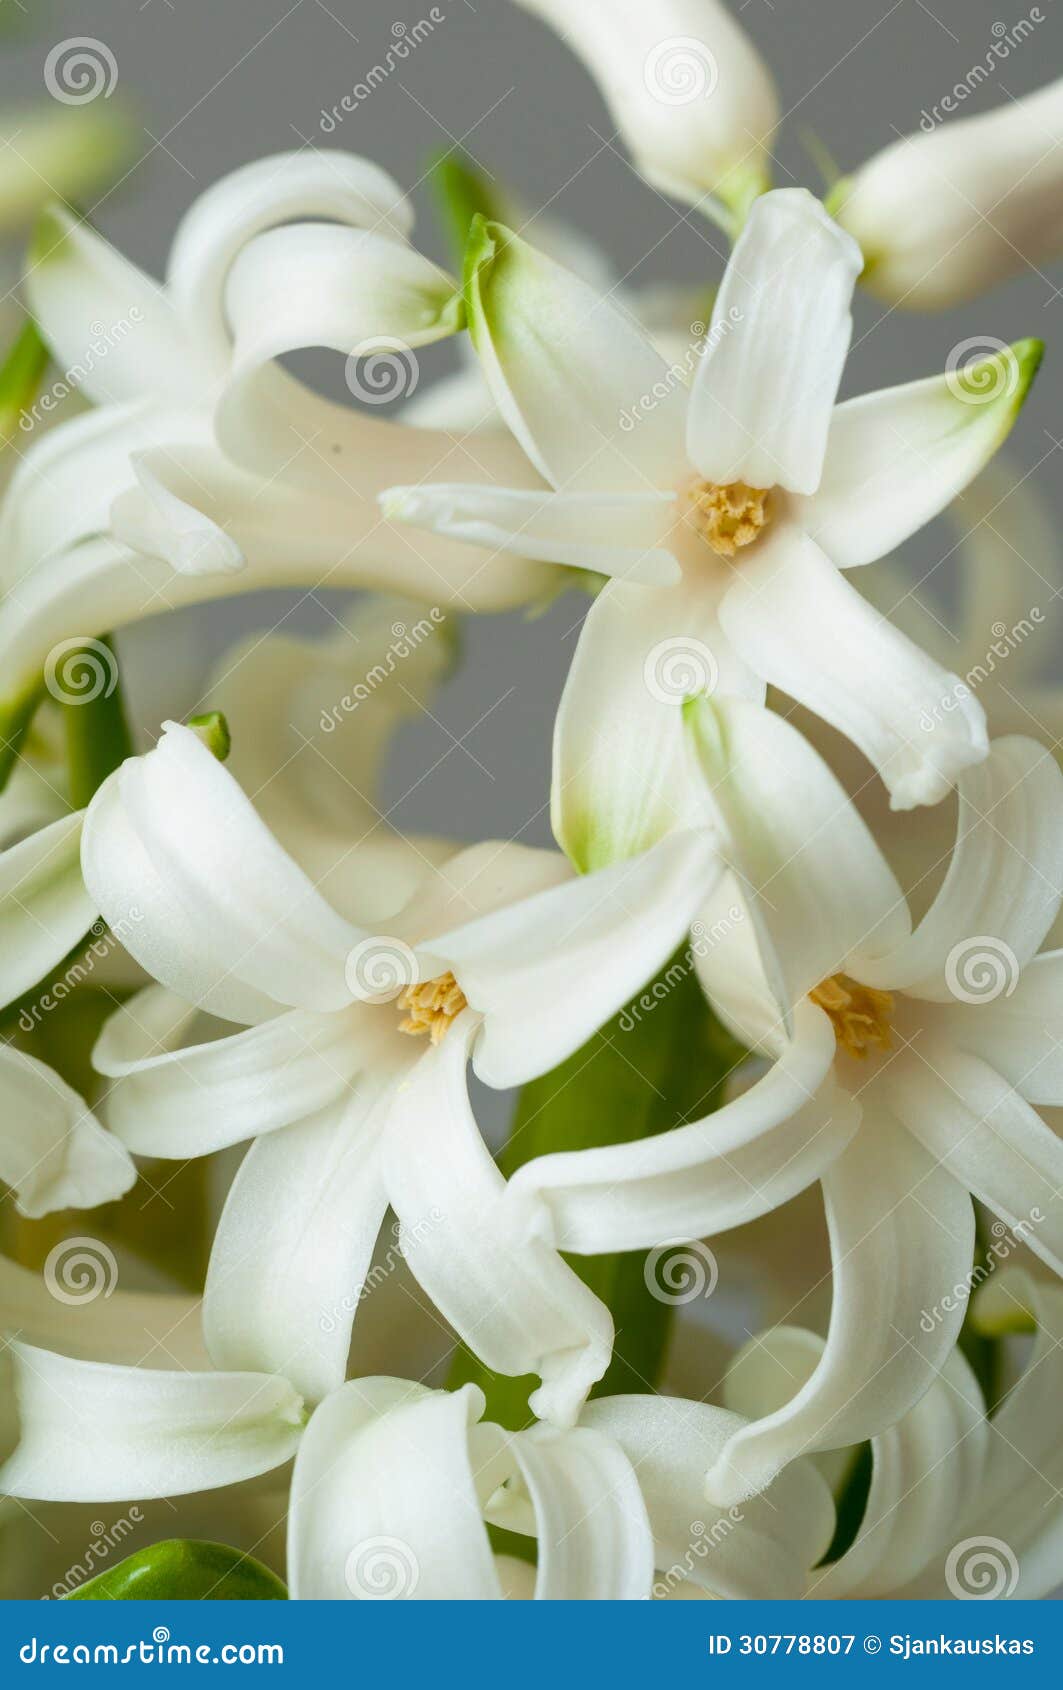 hyacinthus flower blooms